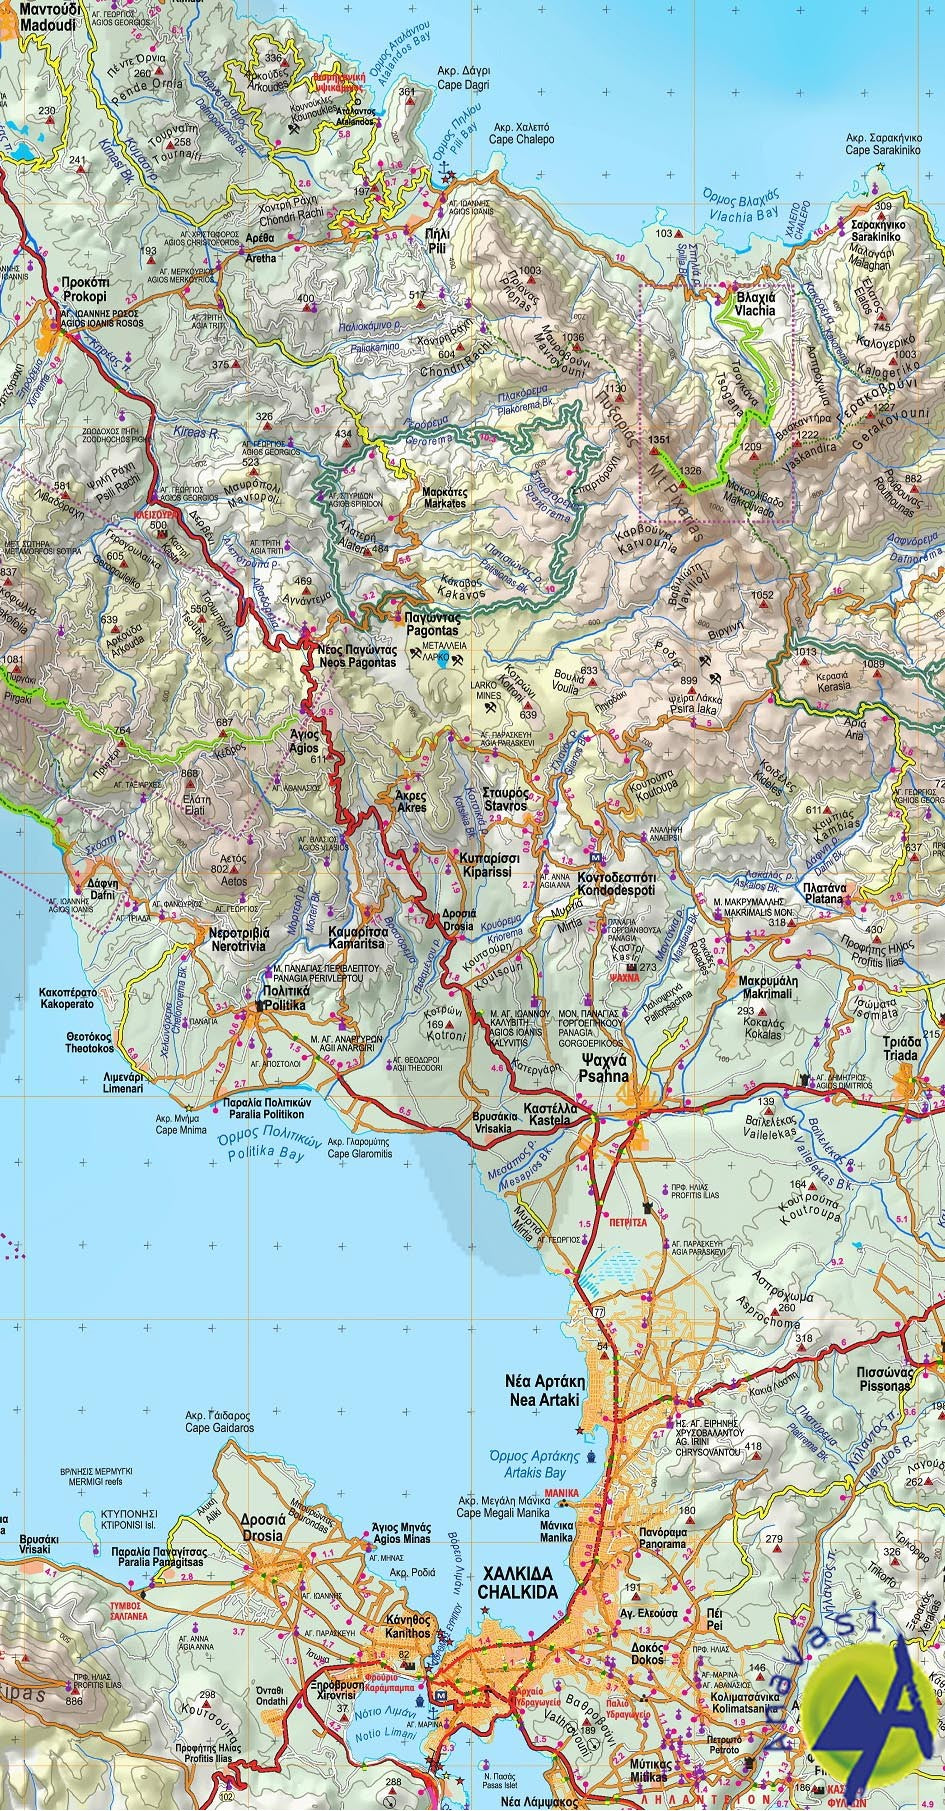 Road map Topo 100 Evia - Skyros 1:110,000 (04)